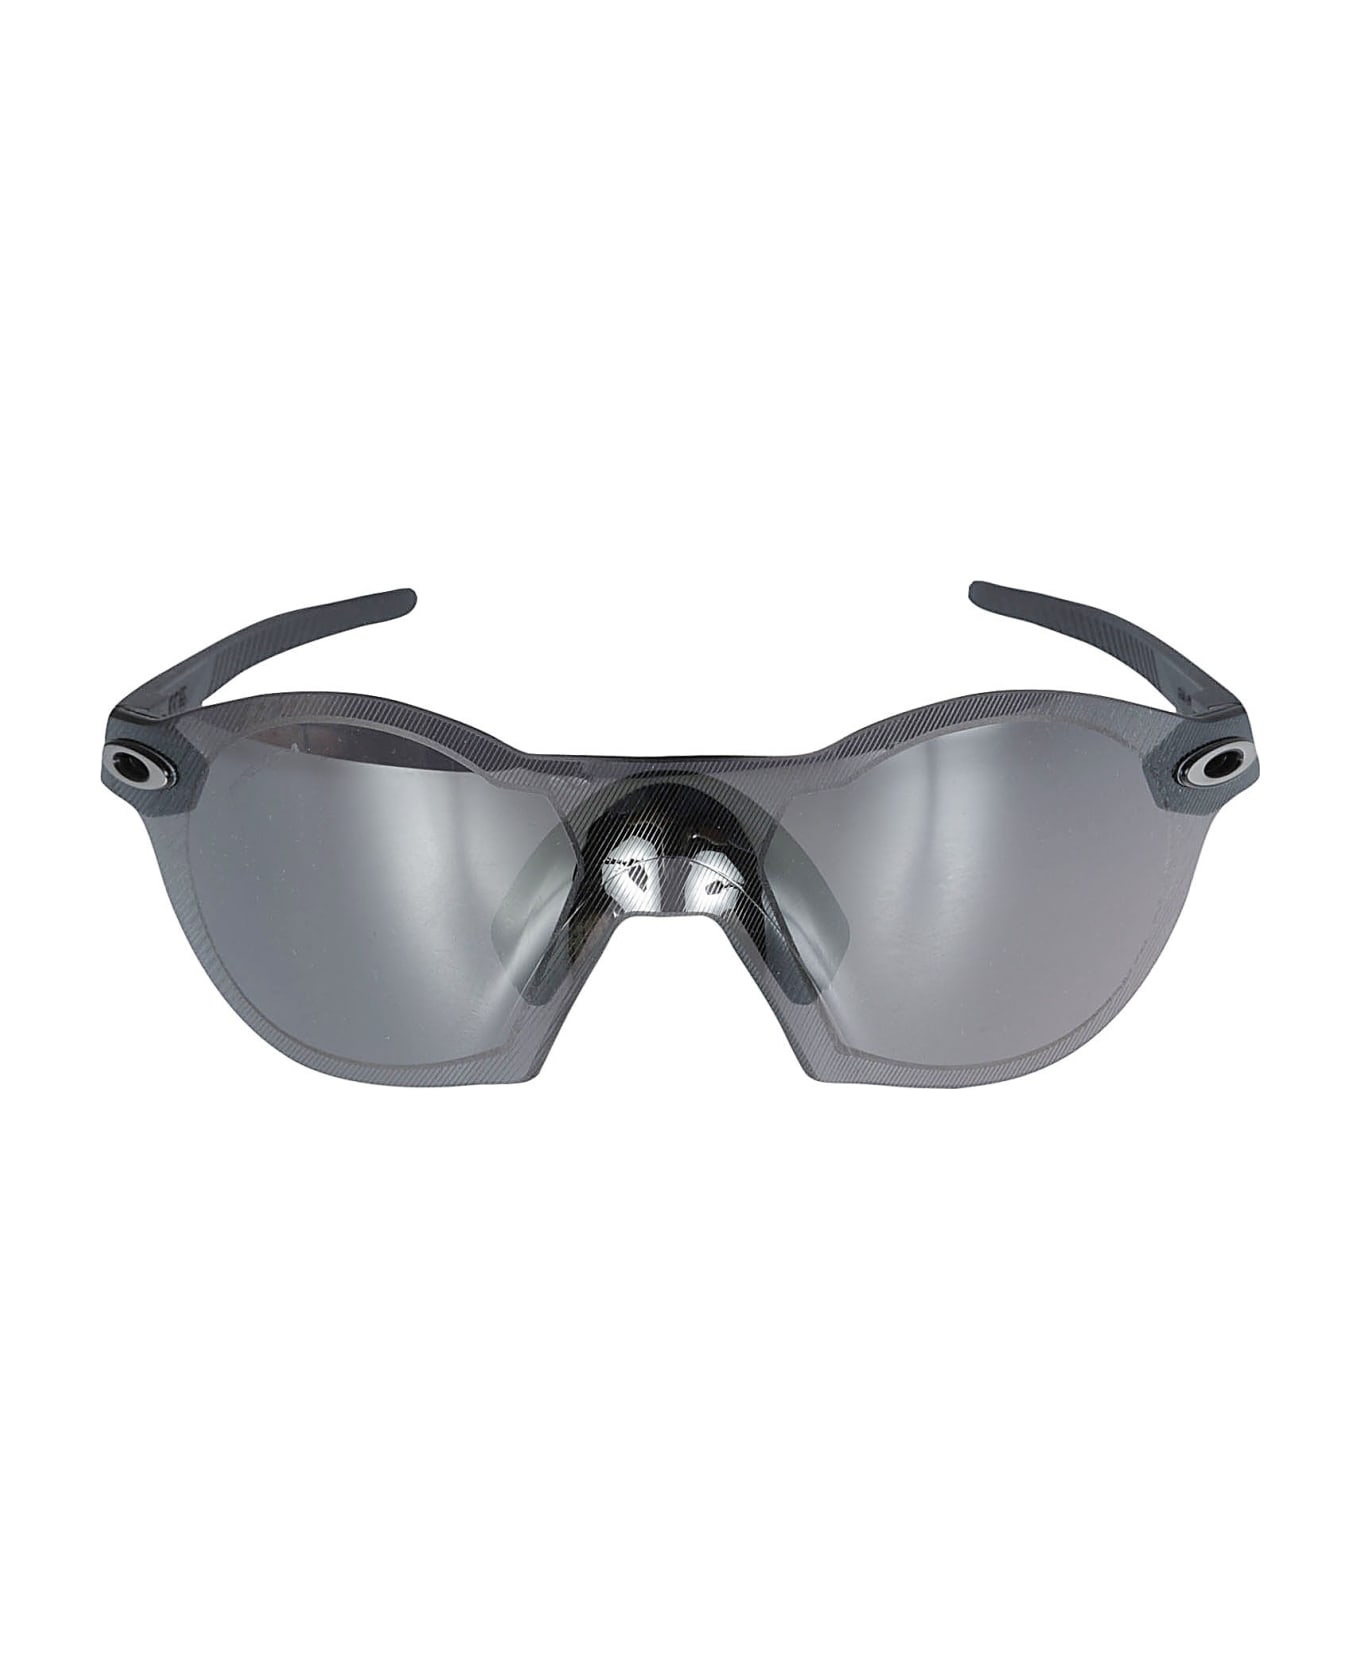 Oakley Sole Shield Sunglasses - 909801 サングラス